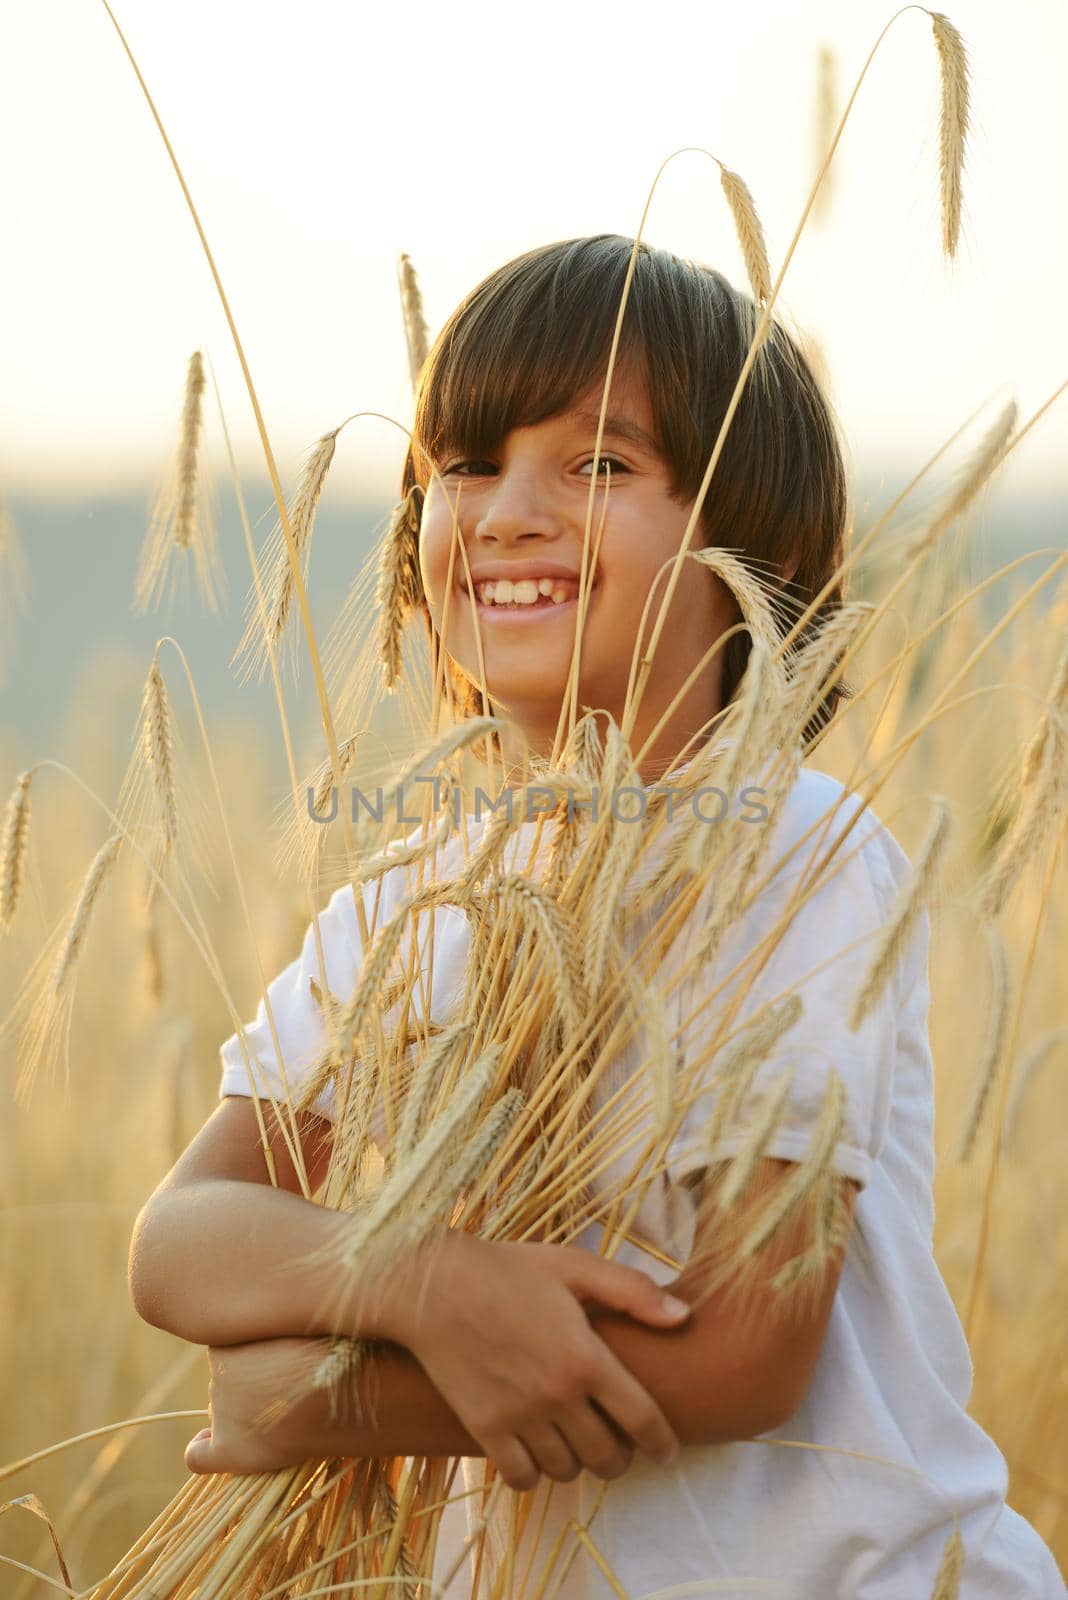 Kid at wheat field hugging harvest grain